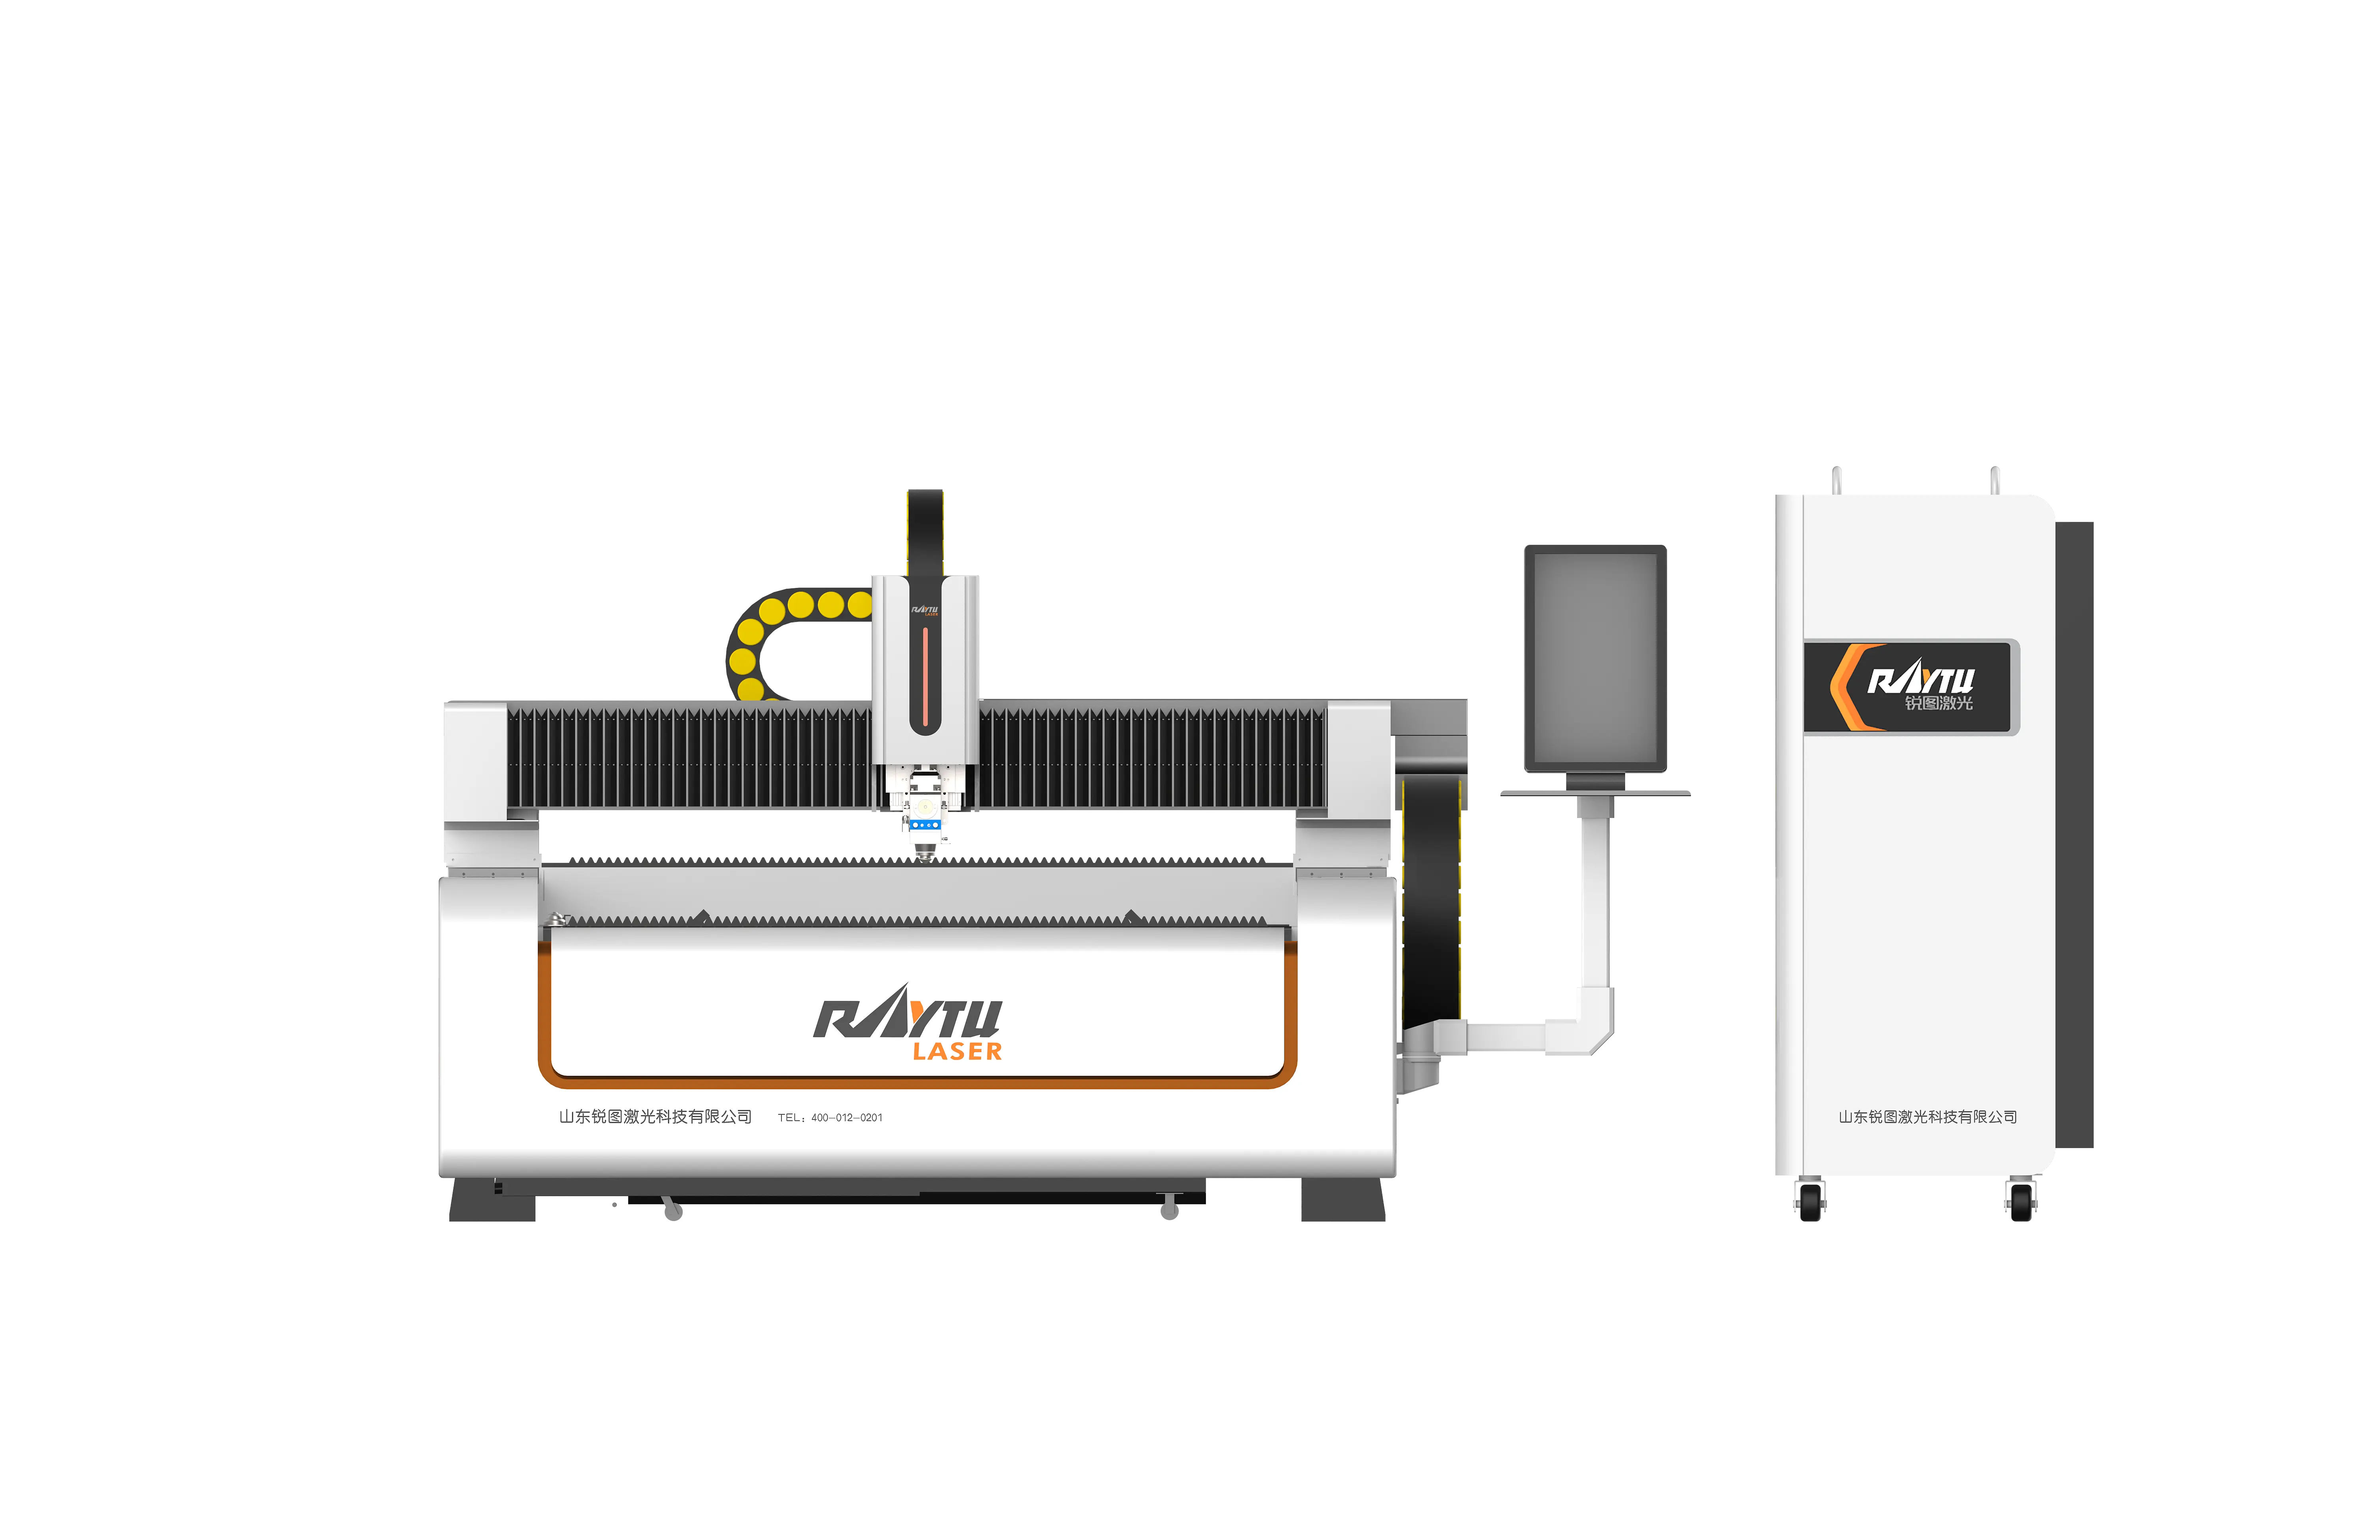 Switch Station Fiber laser Cutting Machine RT - P China manufacturer and supplier